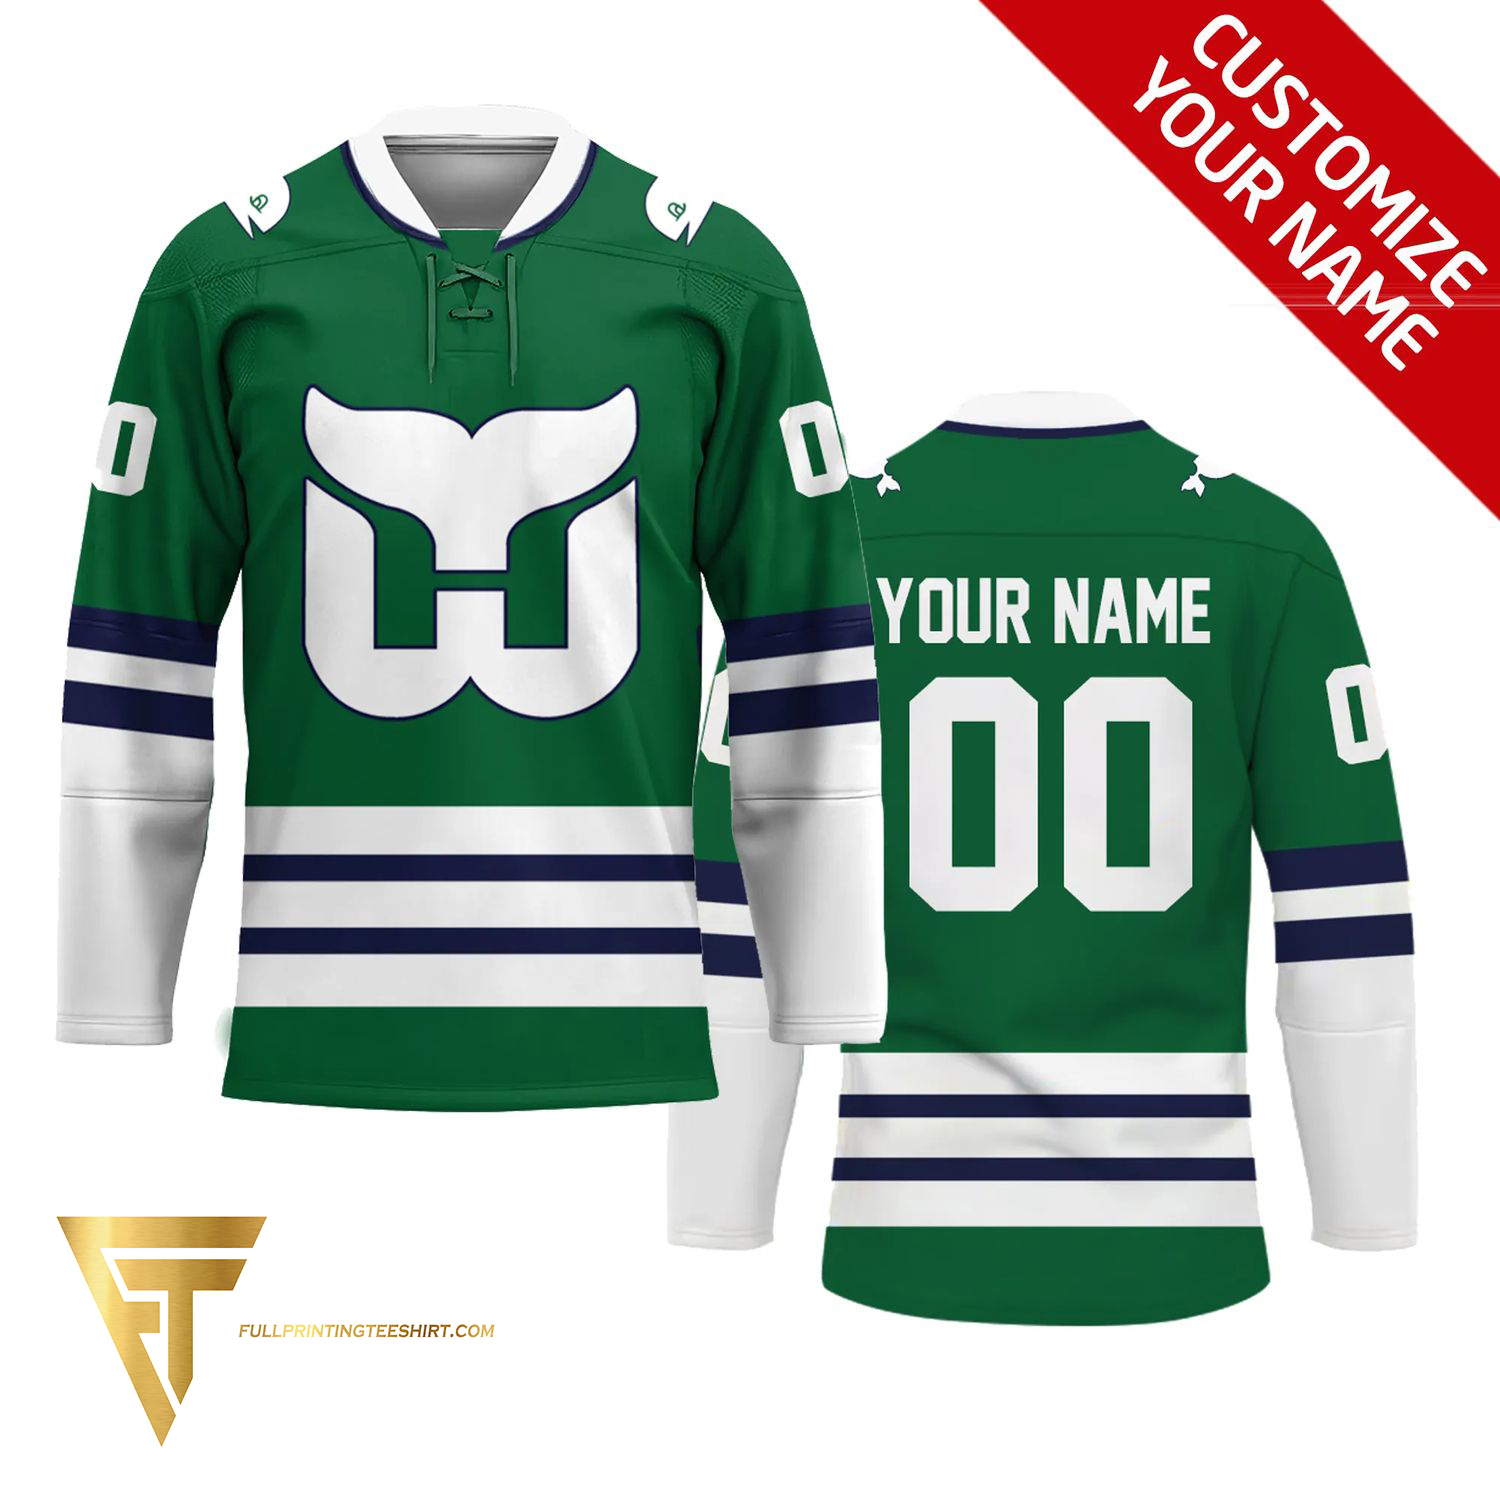 Hartford Whalers Home Uniform - National Hockey League (NHL